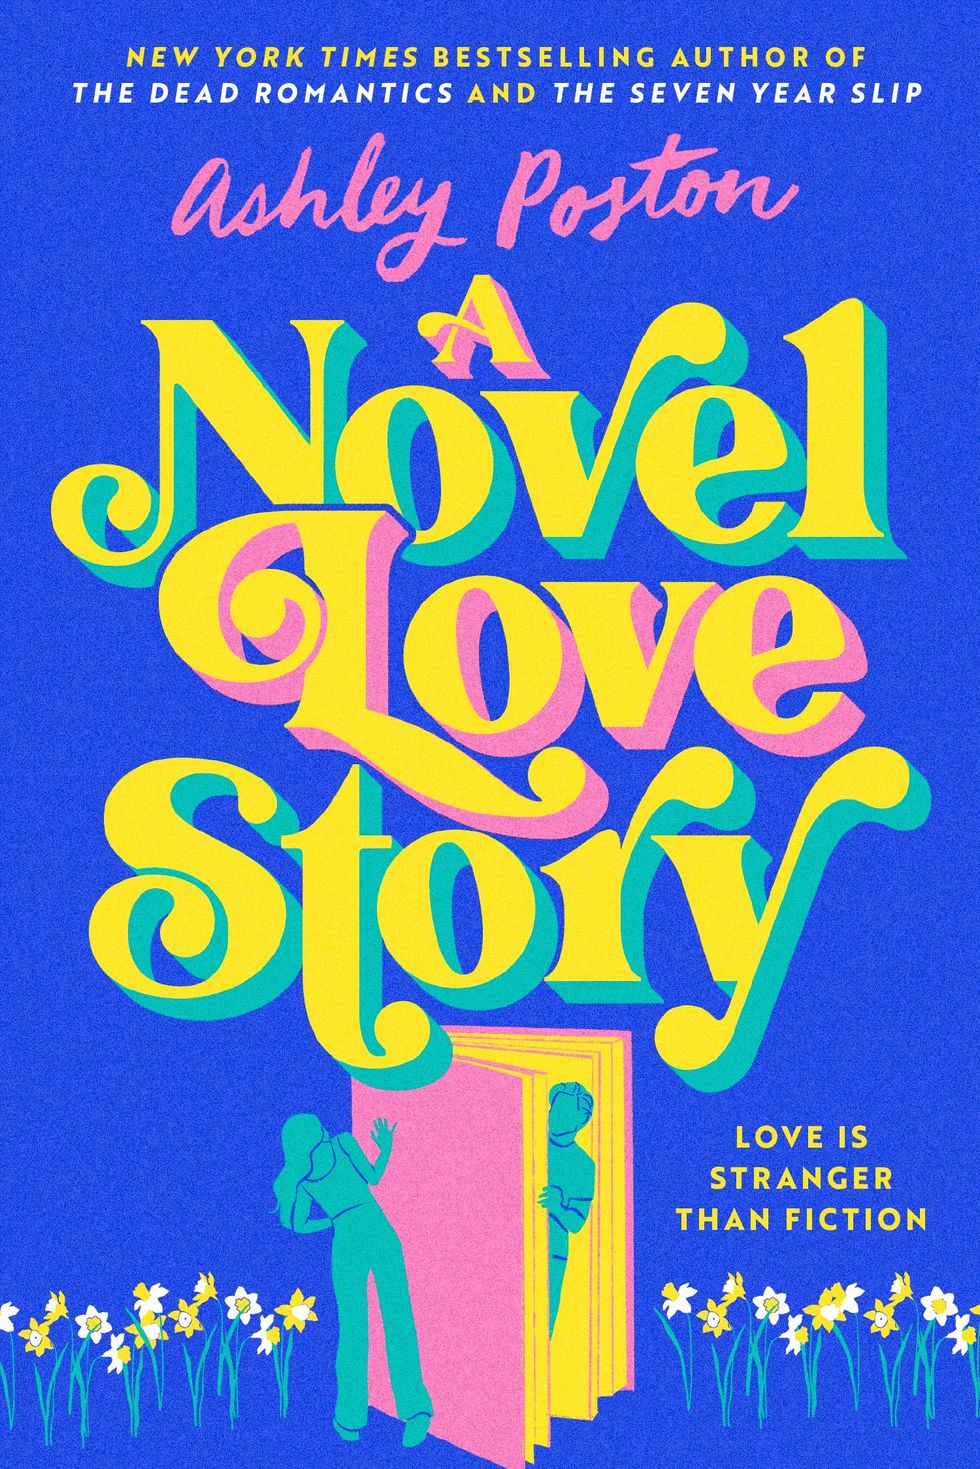 Ashley Poston, 'A Novel Love Story'